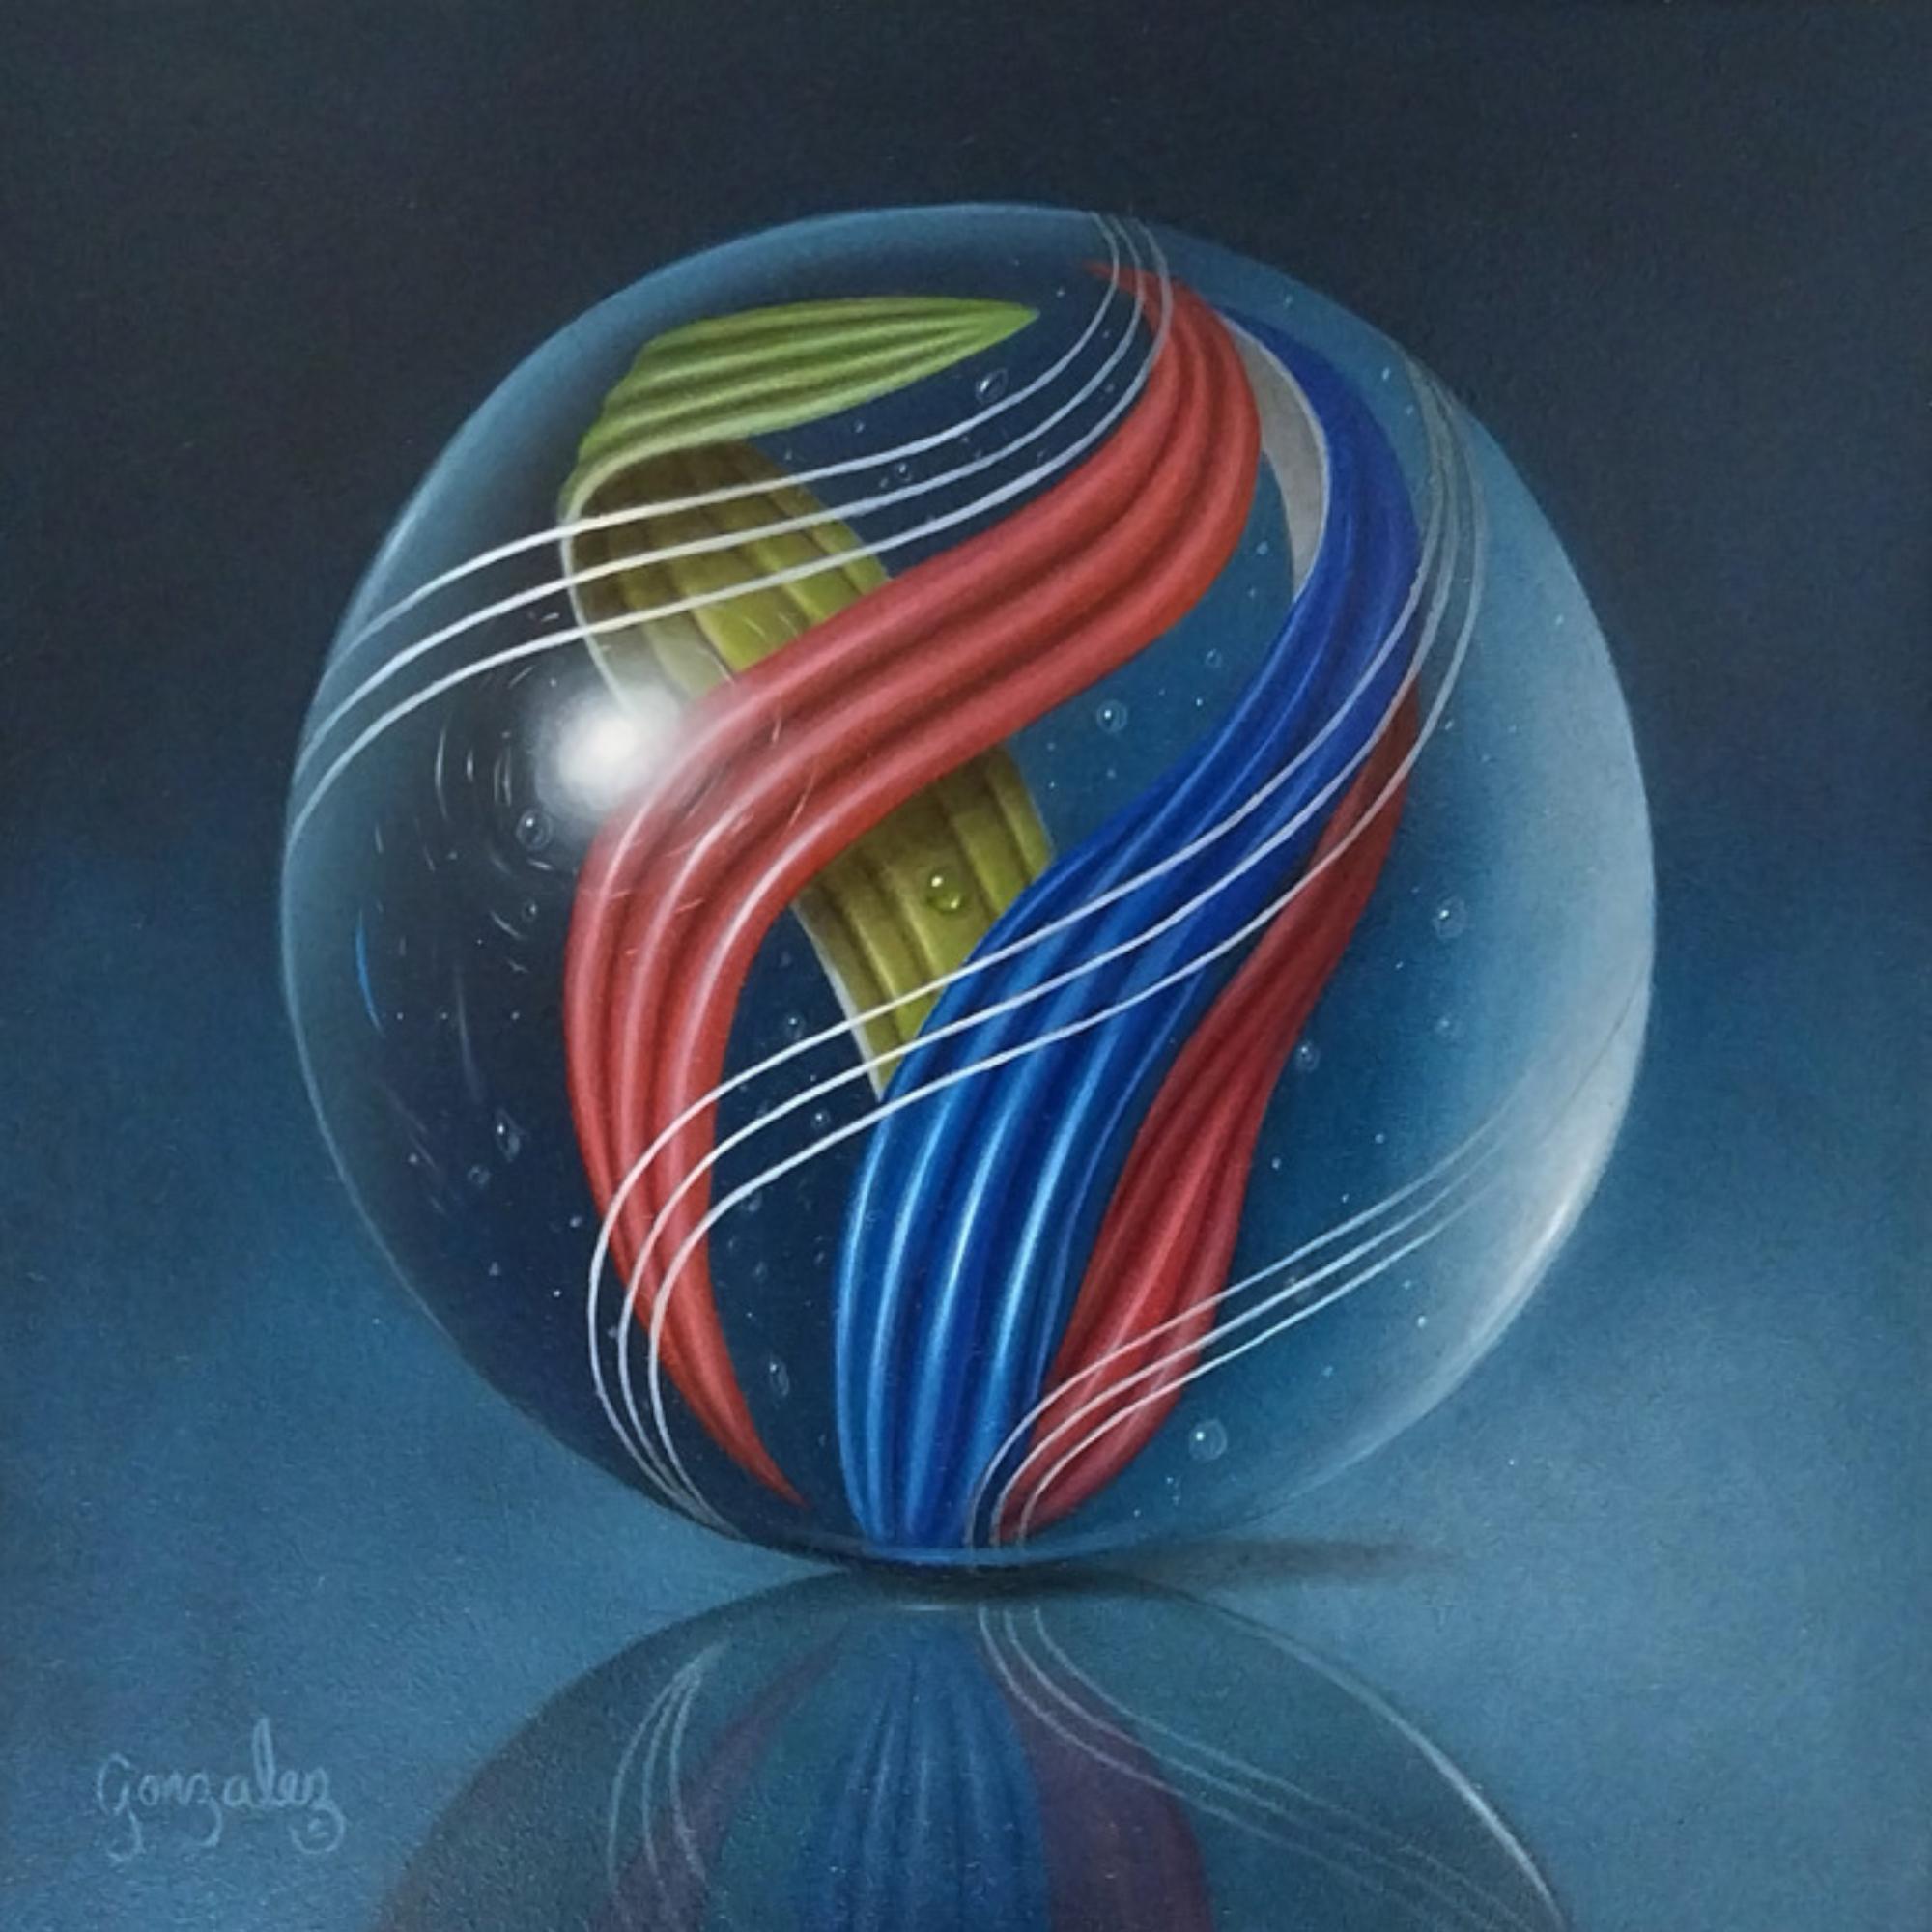 George A. Gonzalez Landscape Painting - Spirals - original contemporary realist glass ball oil painting artwork